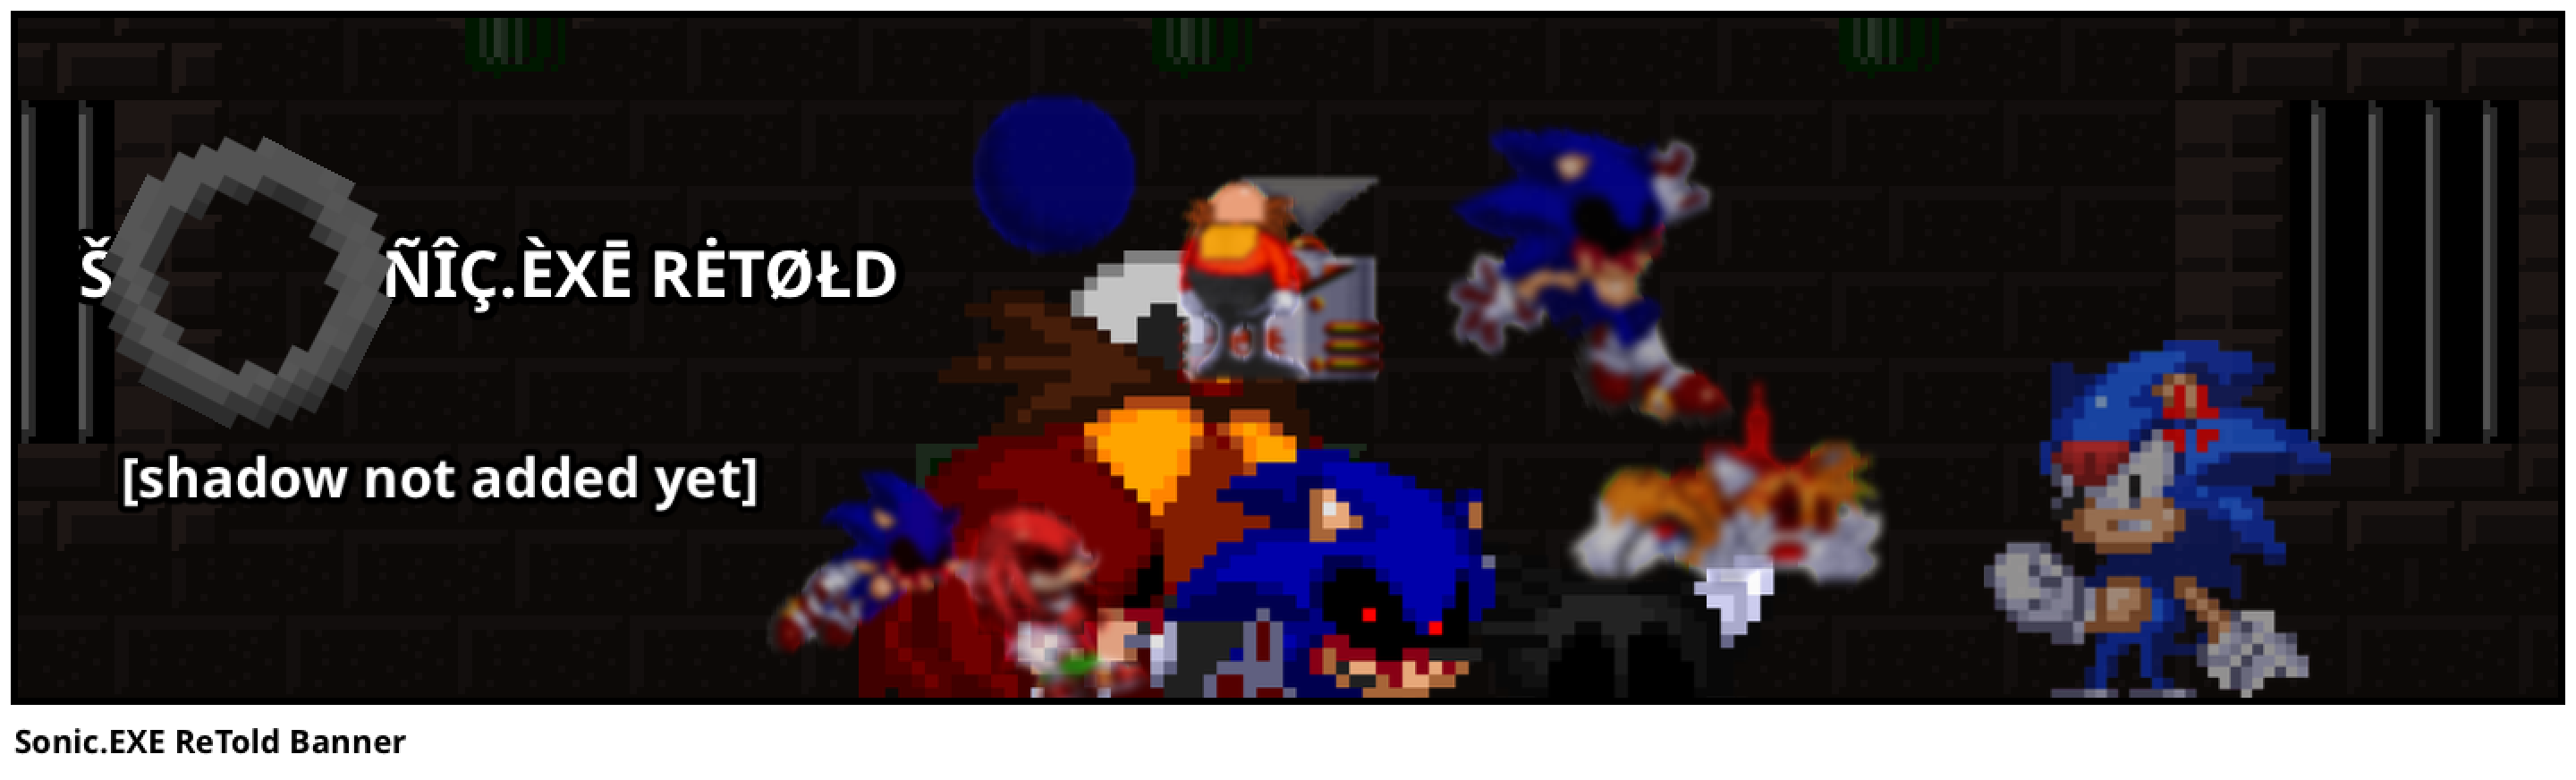 Sonic.EXE ReTold Banner